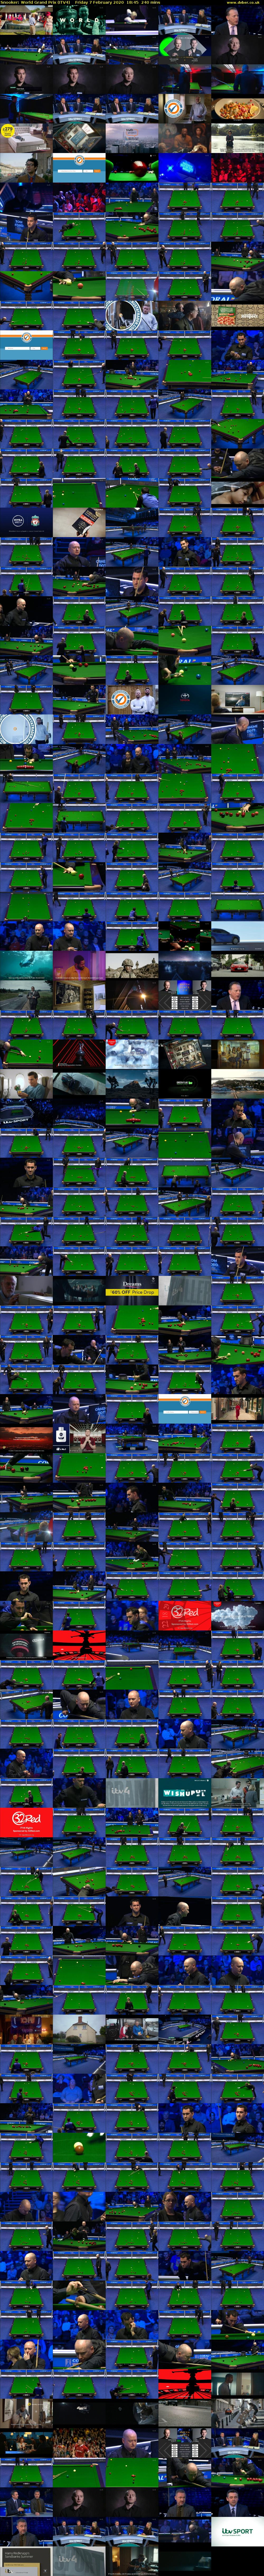 Snooker: World Grand Prix (ITV4) Friday 7 February 2020 18:45 - 22:45